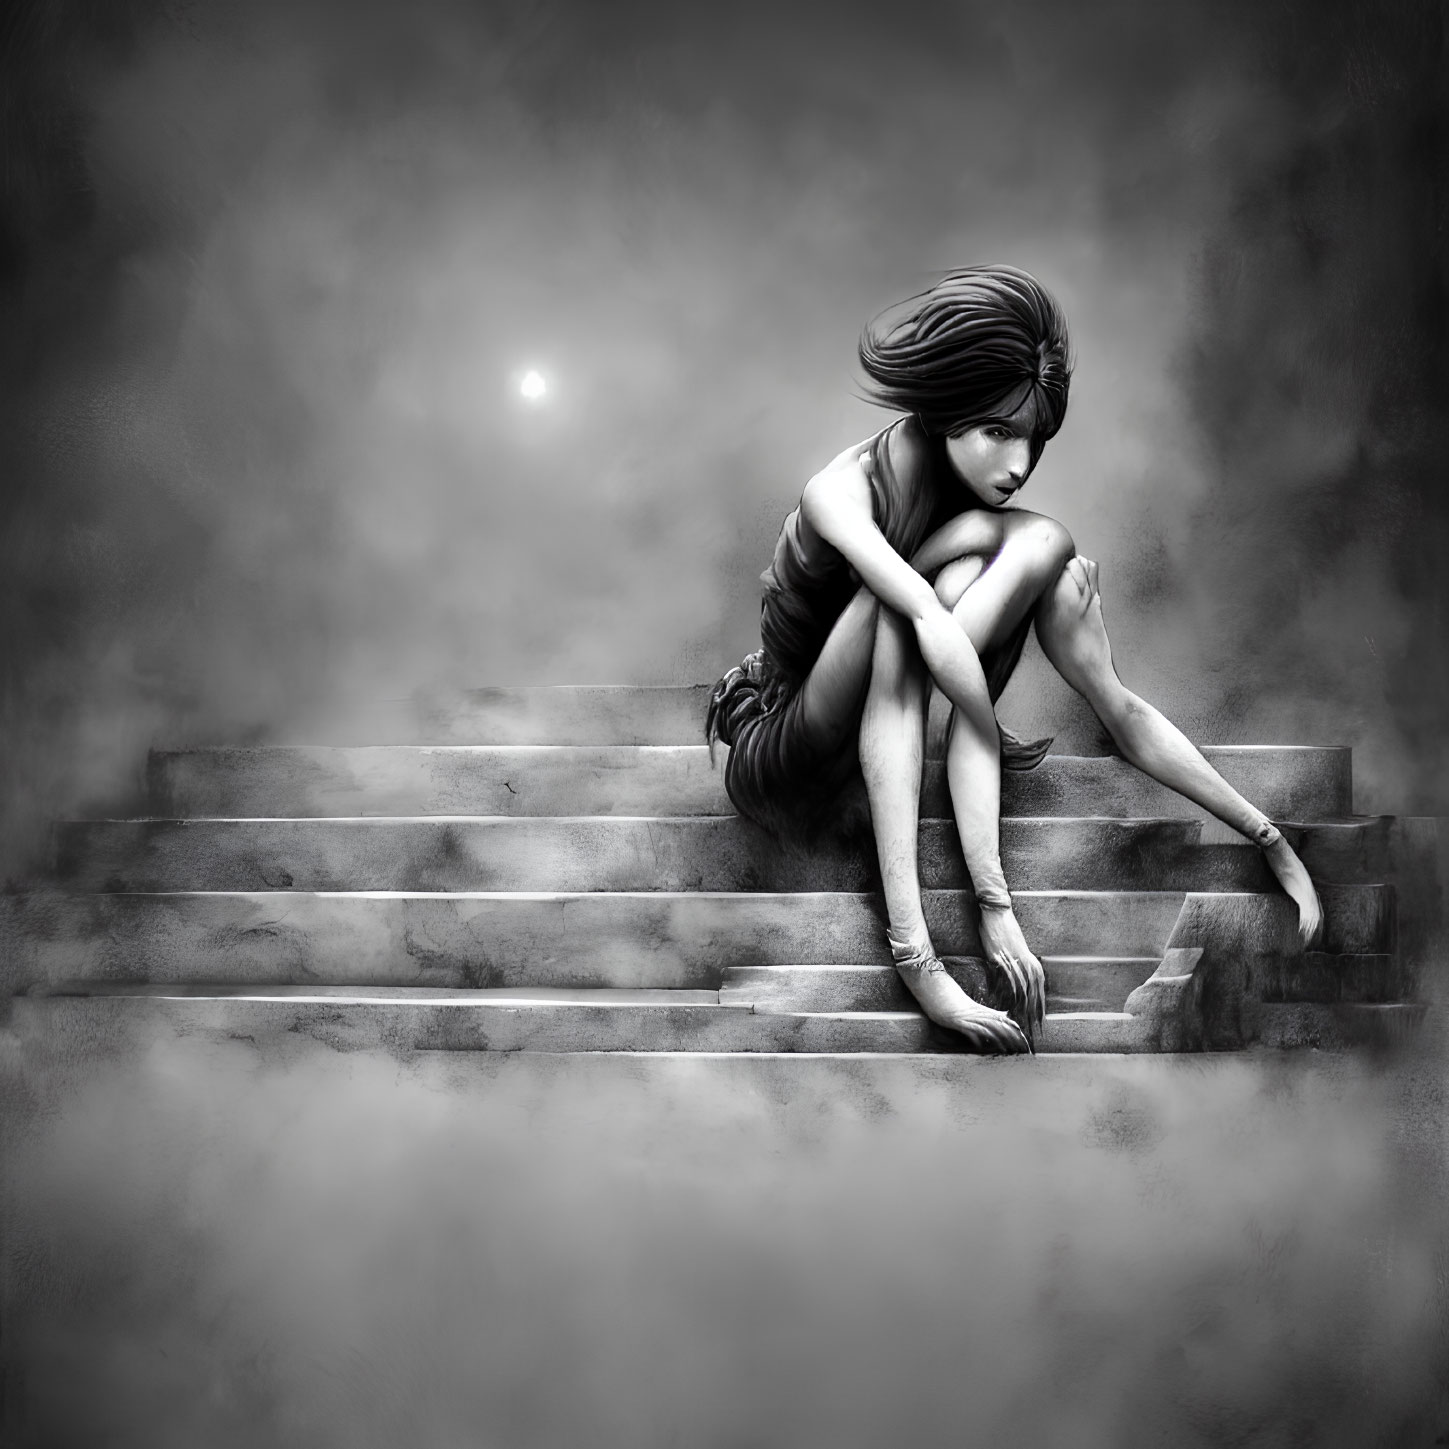 Monochromatic image: Contemplative woman on misty steps with faint sun